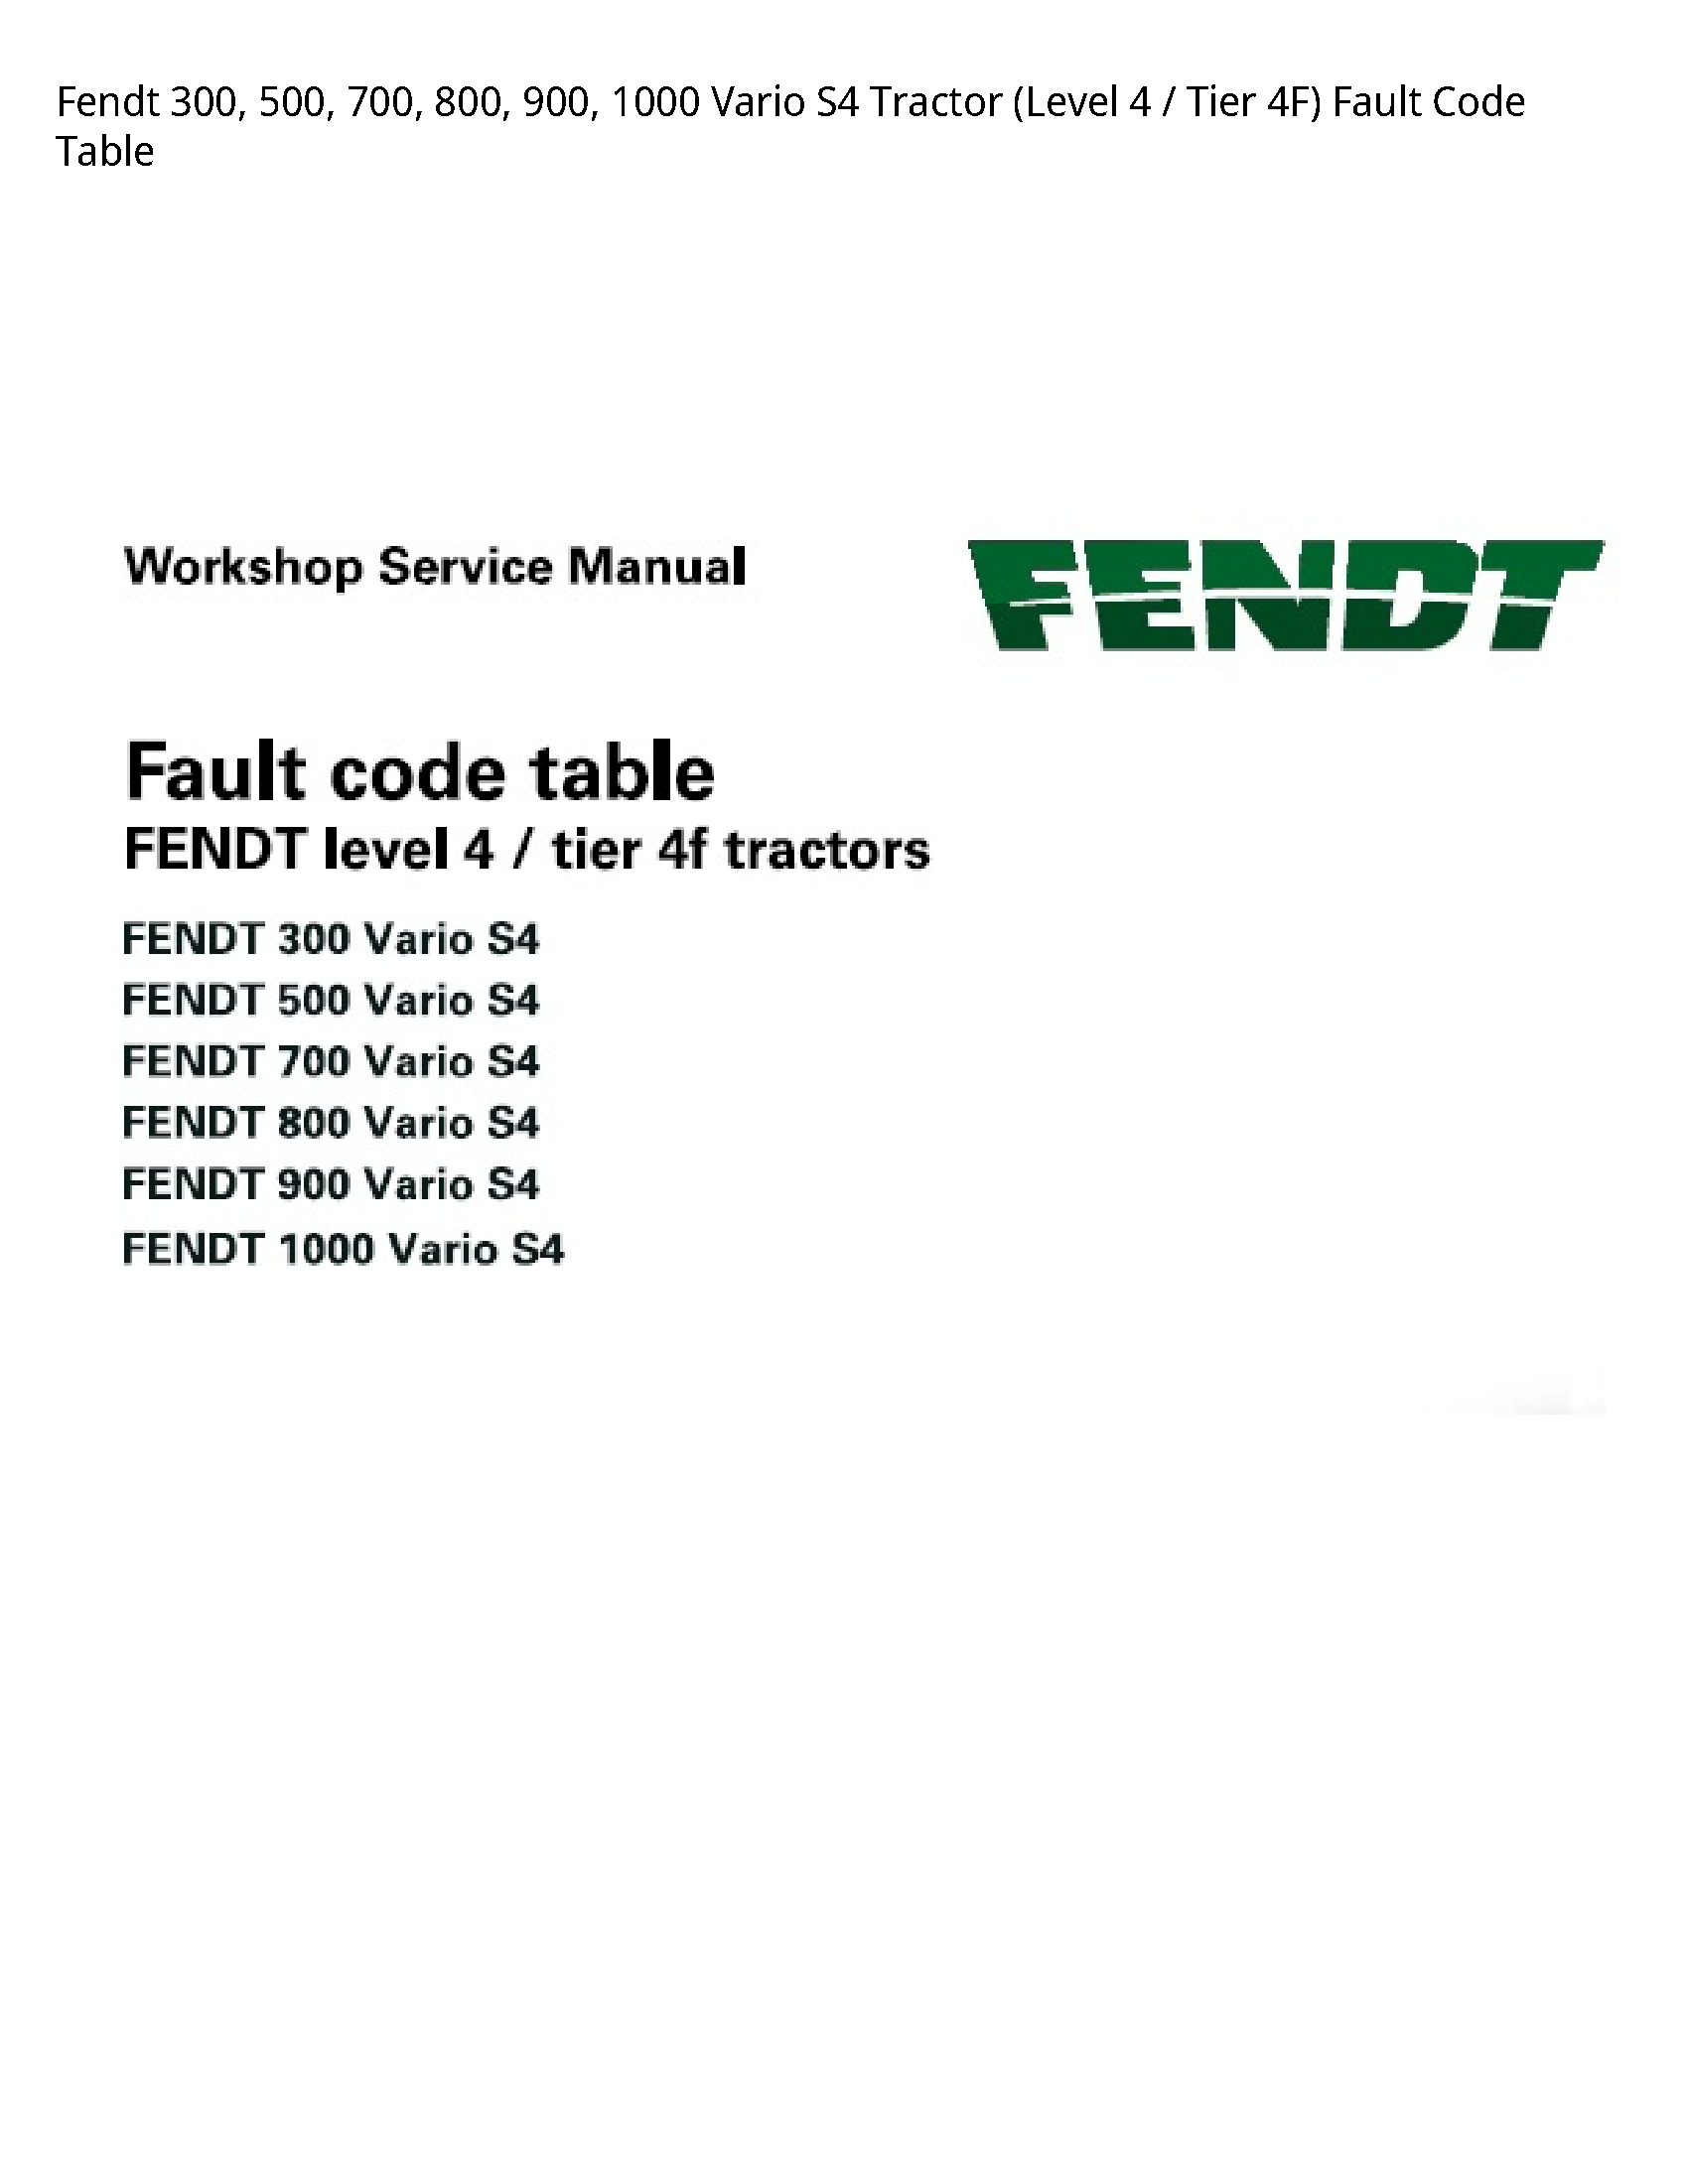 Fendt 300 Vario Tractor (Level Tier Fault Code Table manual